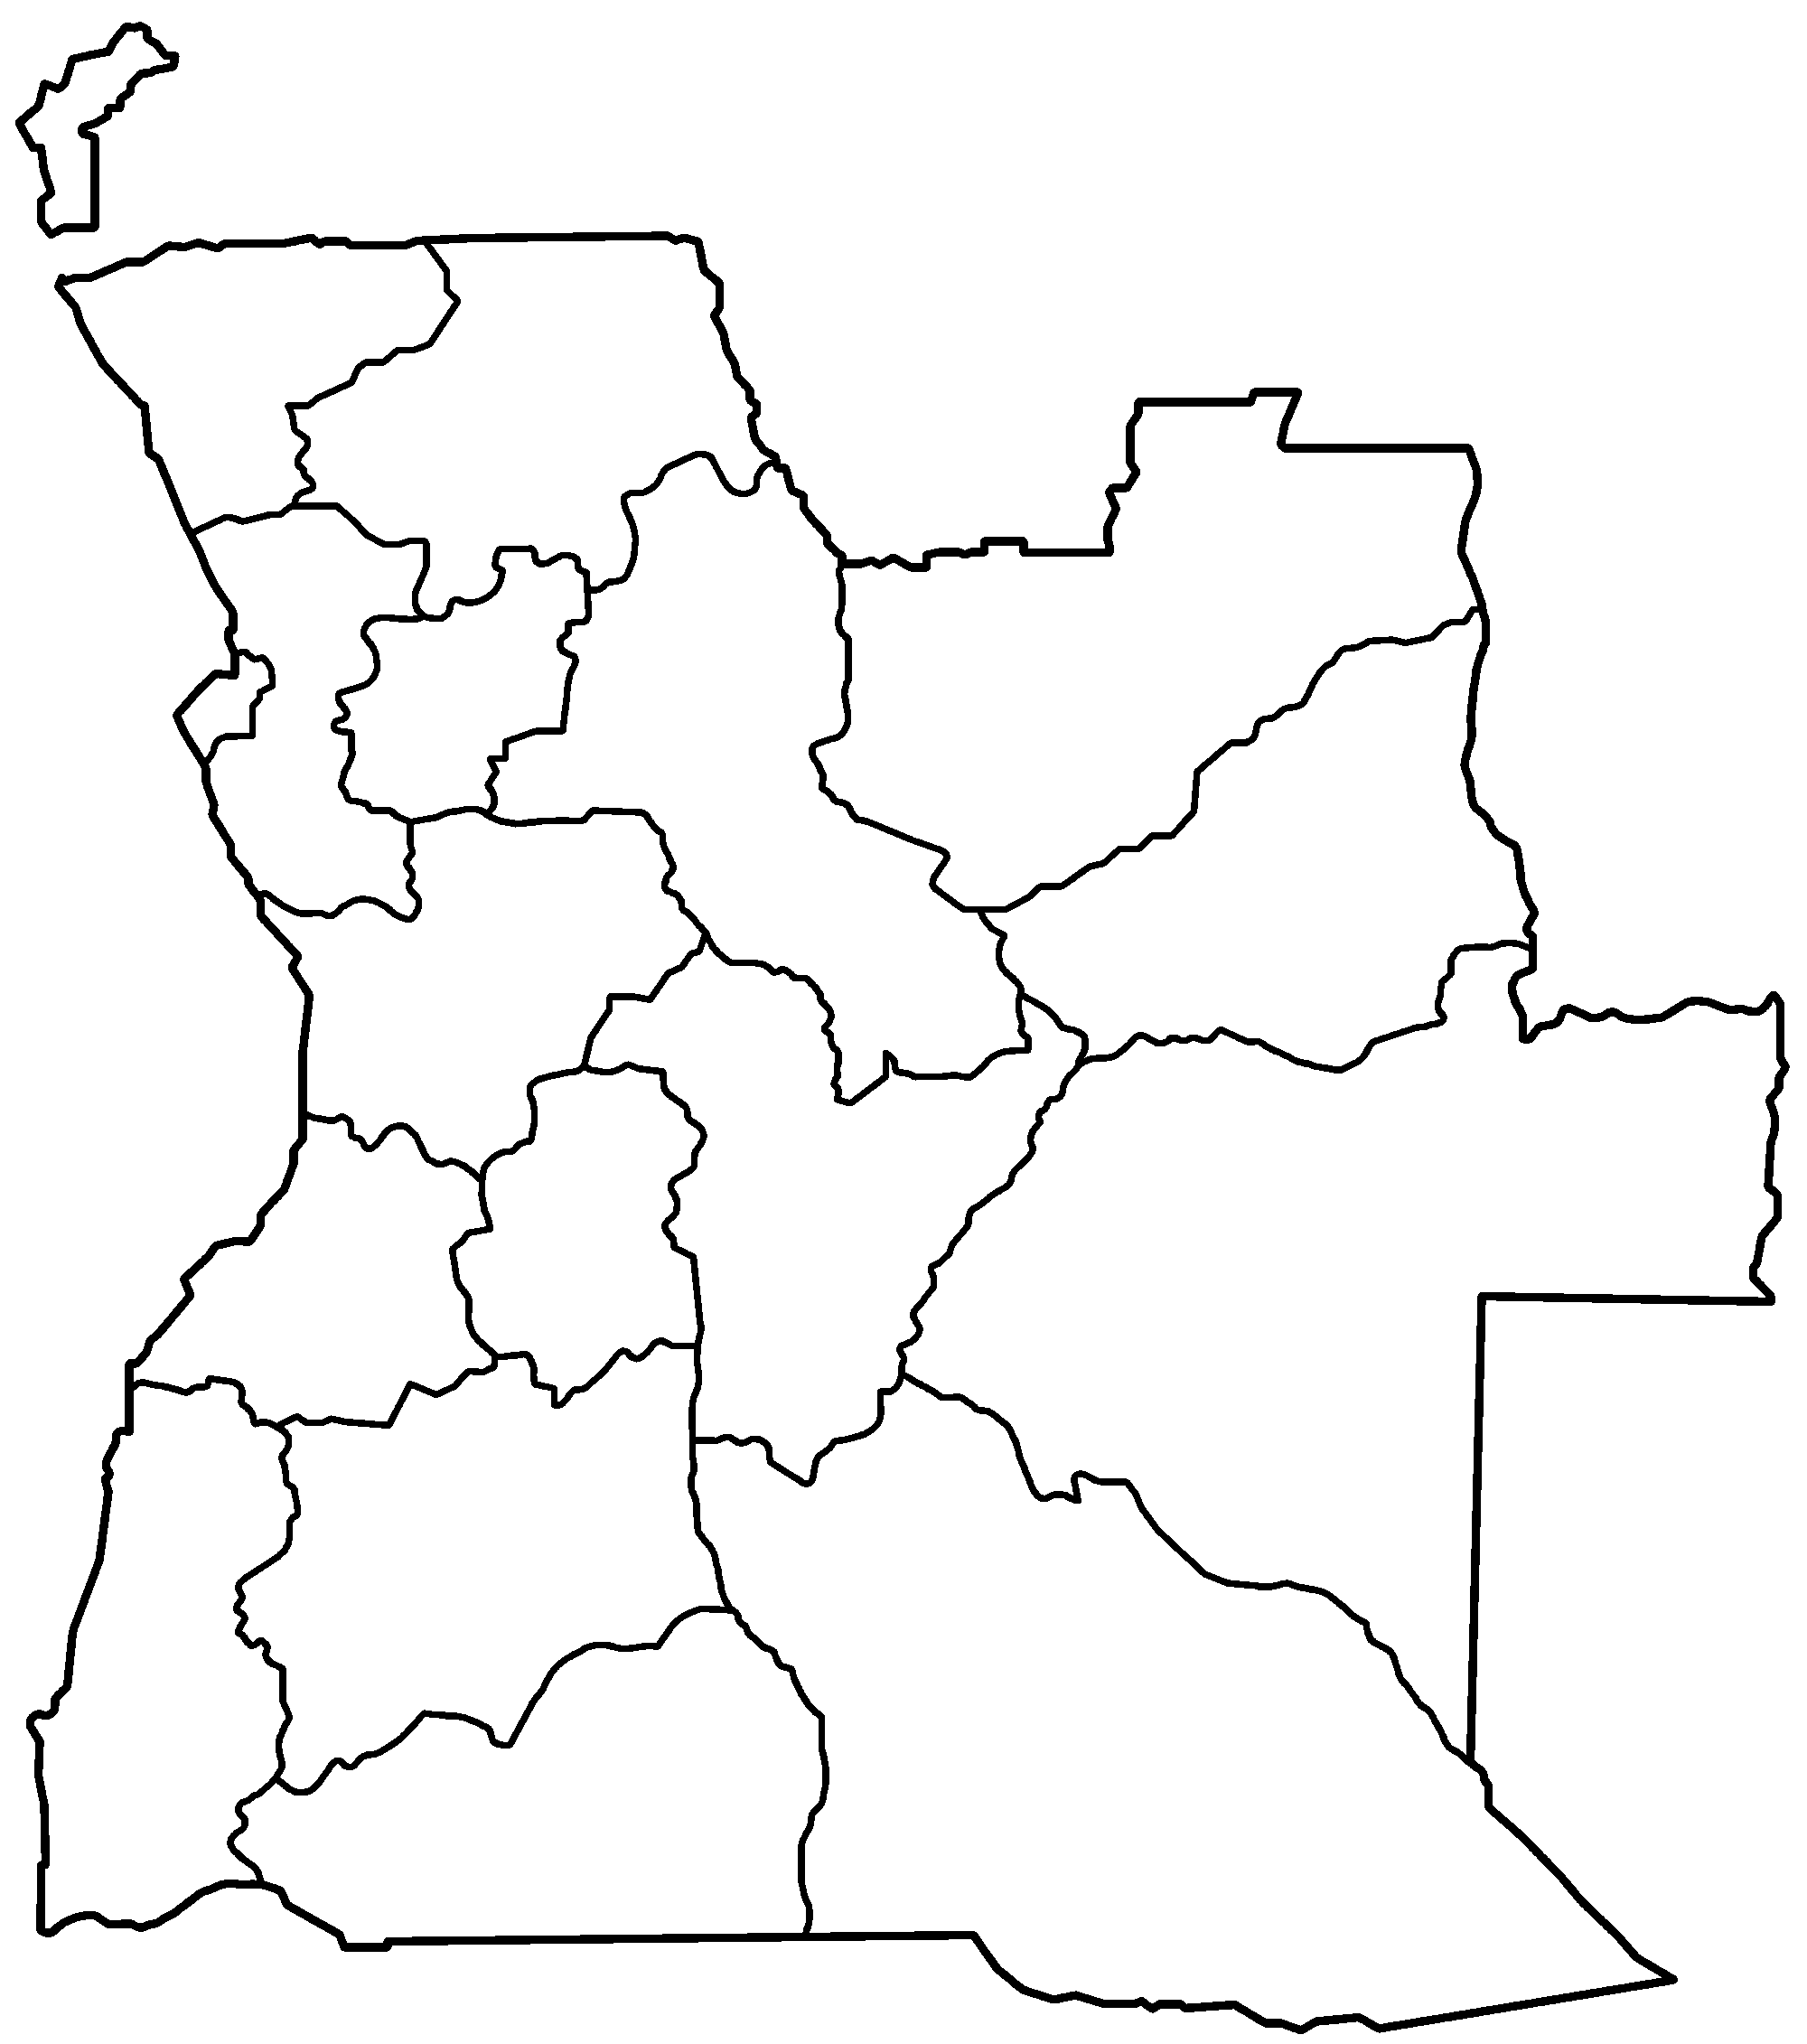 Angola Provinces Blank - MapSof.net